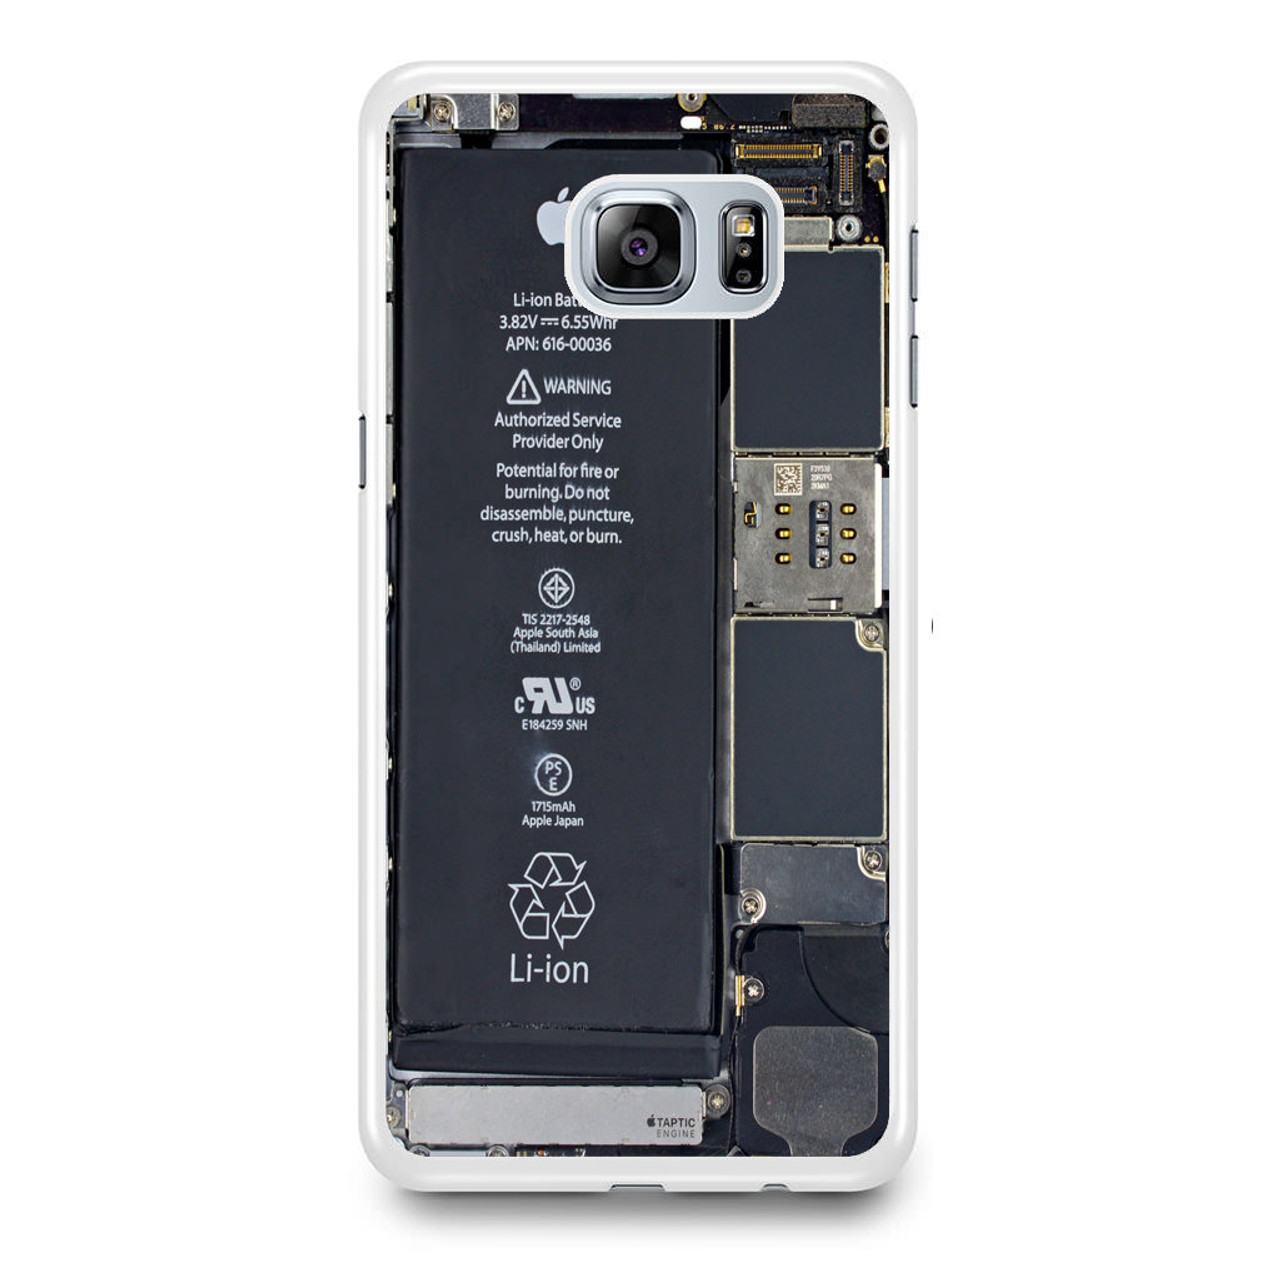 iPhone Fake Internals Engine Samsung Galaxy S6 Edge Plus Case - CASESHUNTER